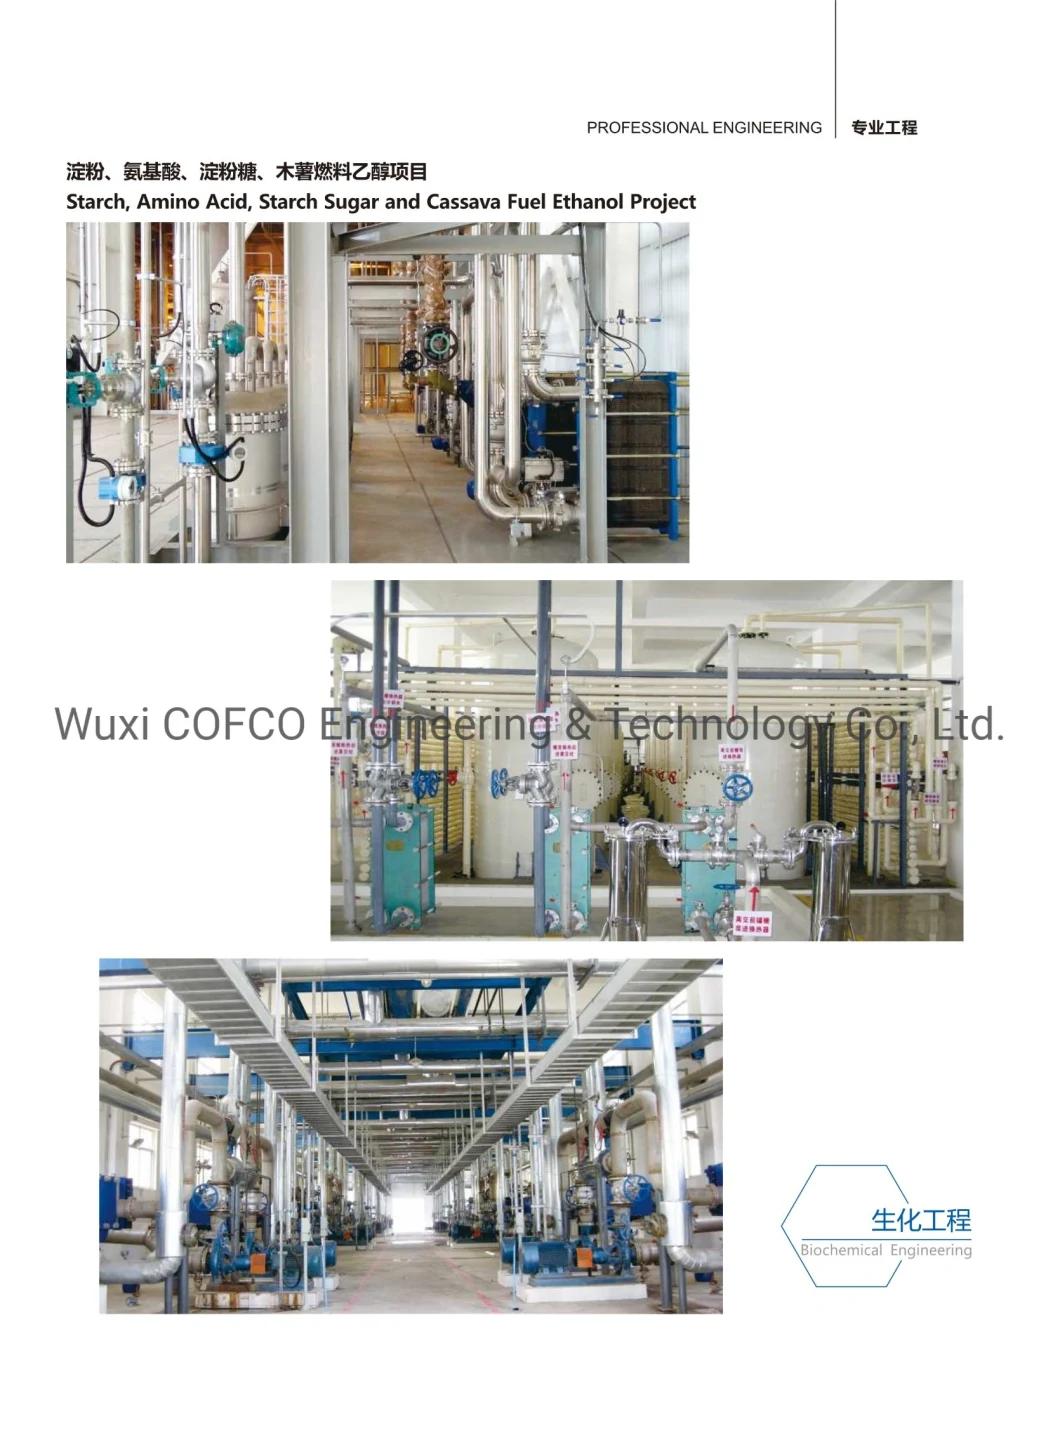 COFCOET Biochemical Engineering Production Line